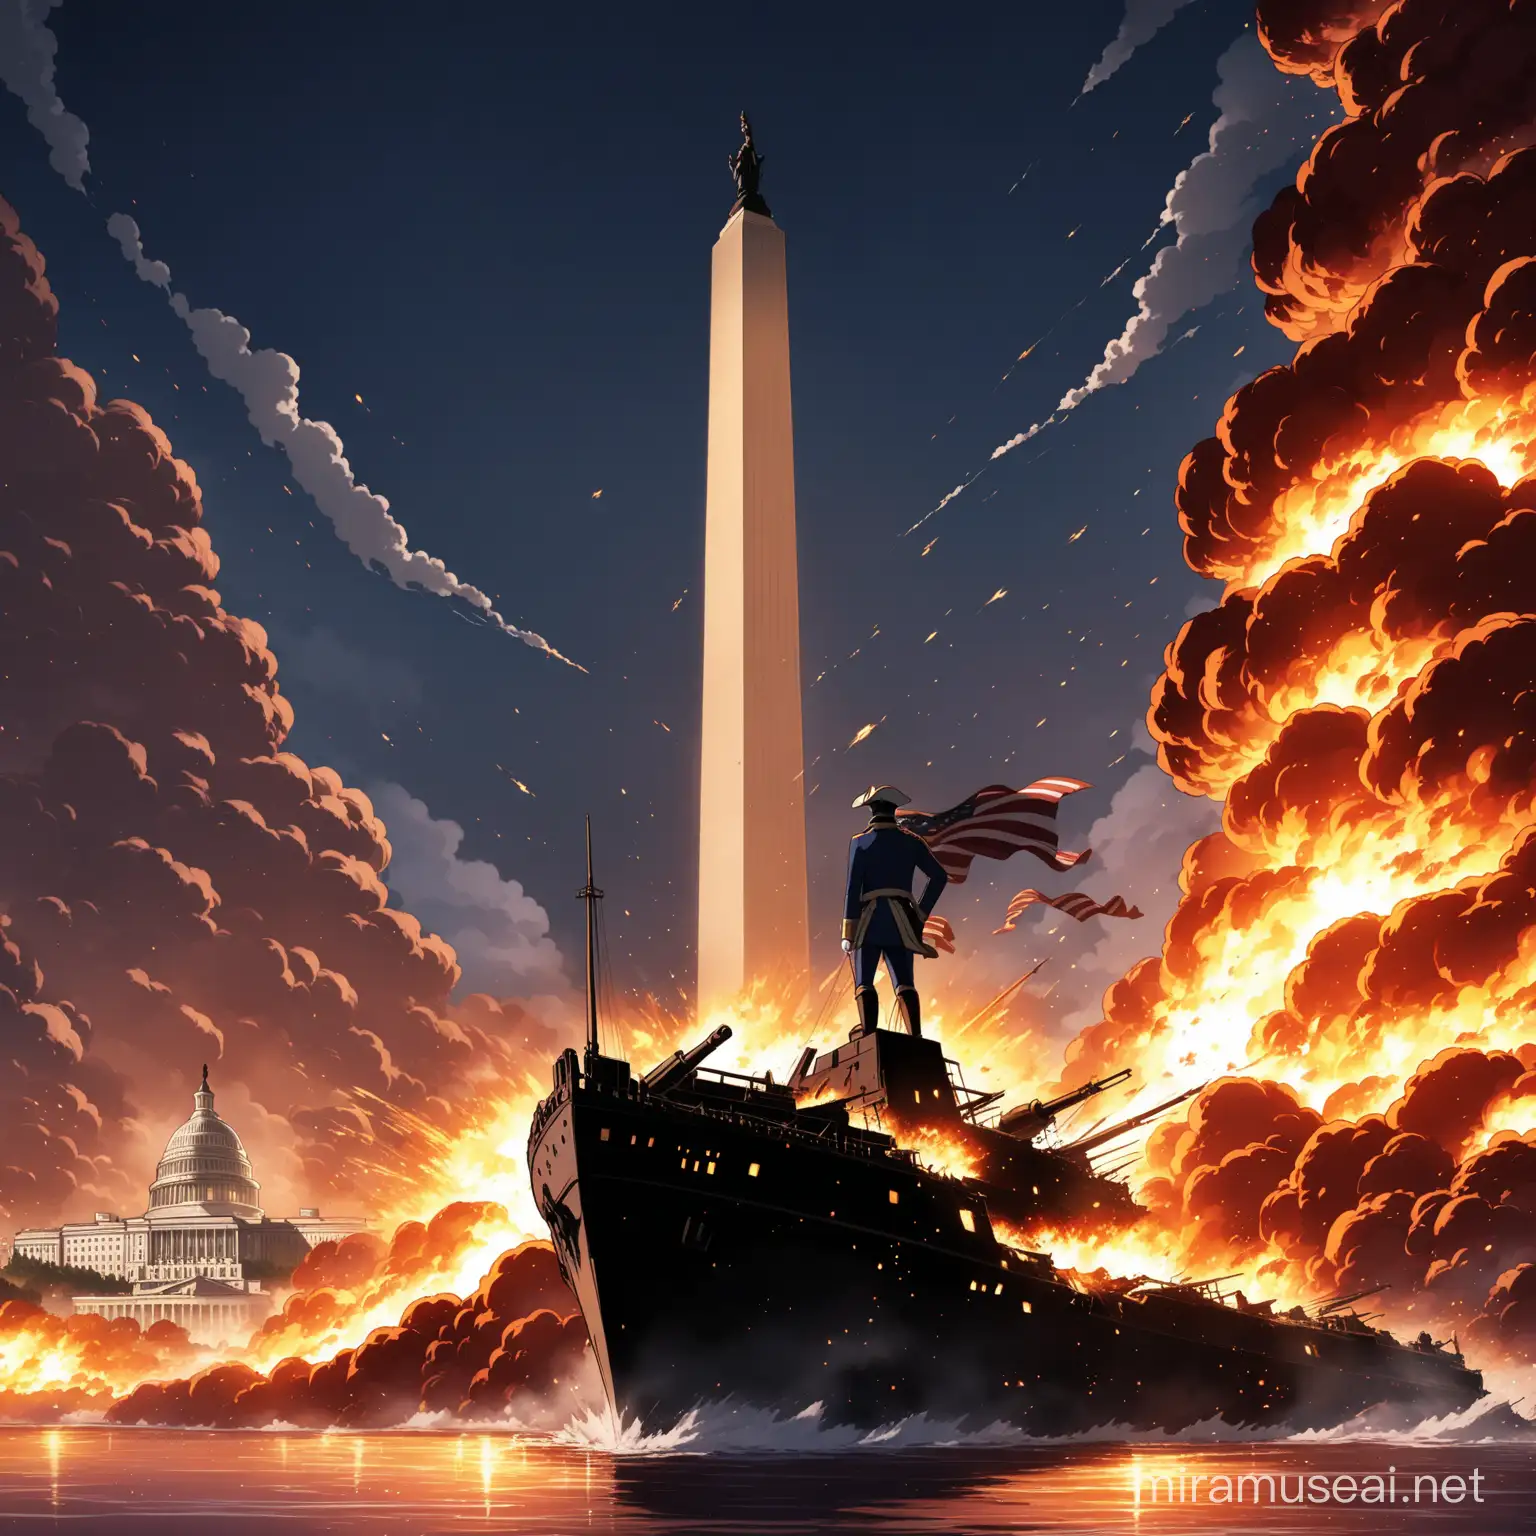 Anime Destruction of Washington Chaos and Catastrophe Unleashed